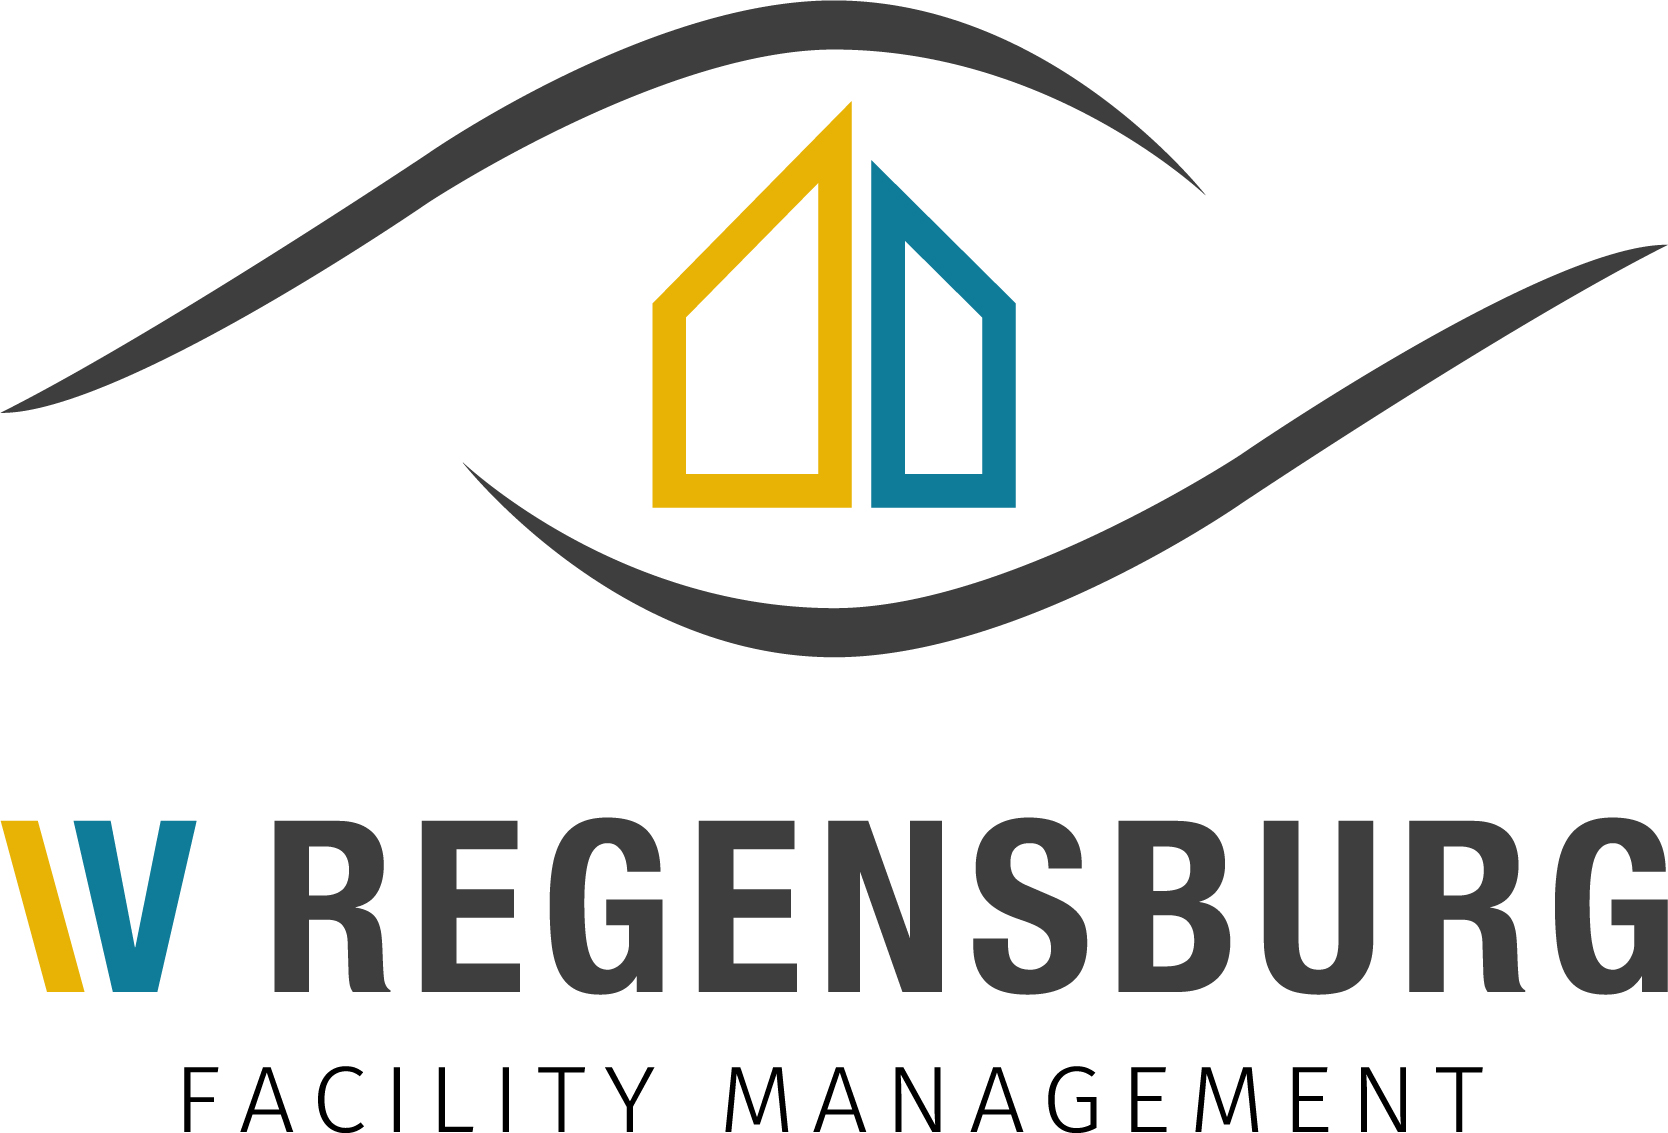 Immobilien Finanzierung, Immobilienvermittlung, Immobilie verwalten, Immobilie verkaufen IV Regensburg